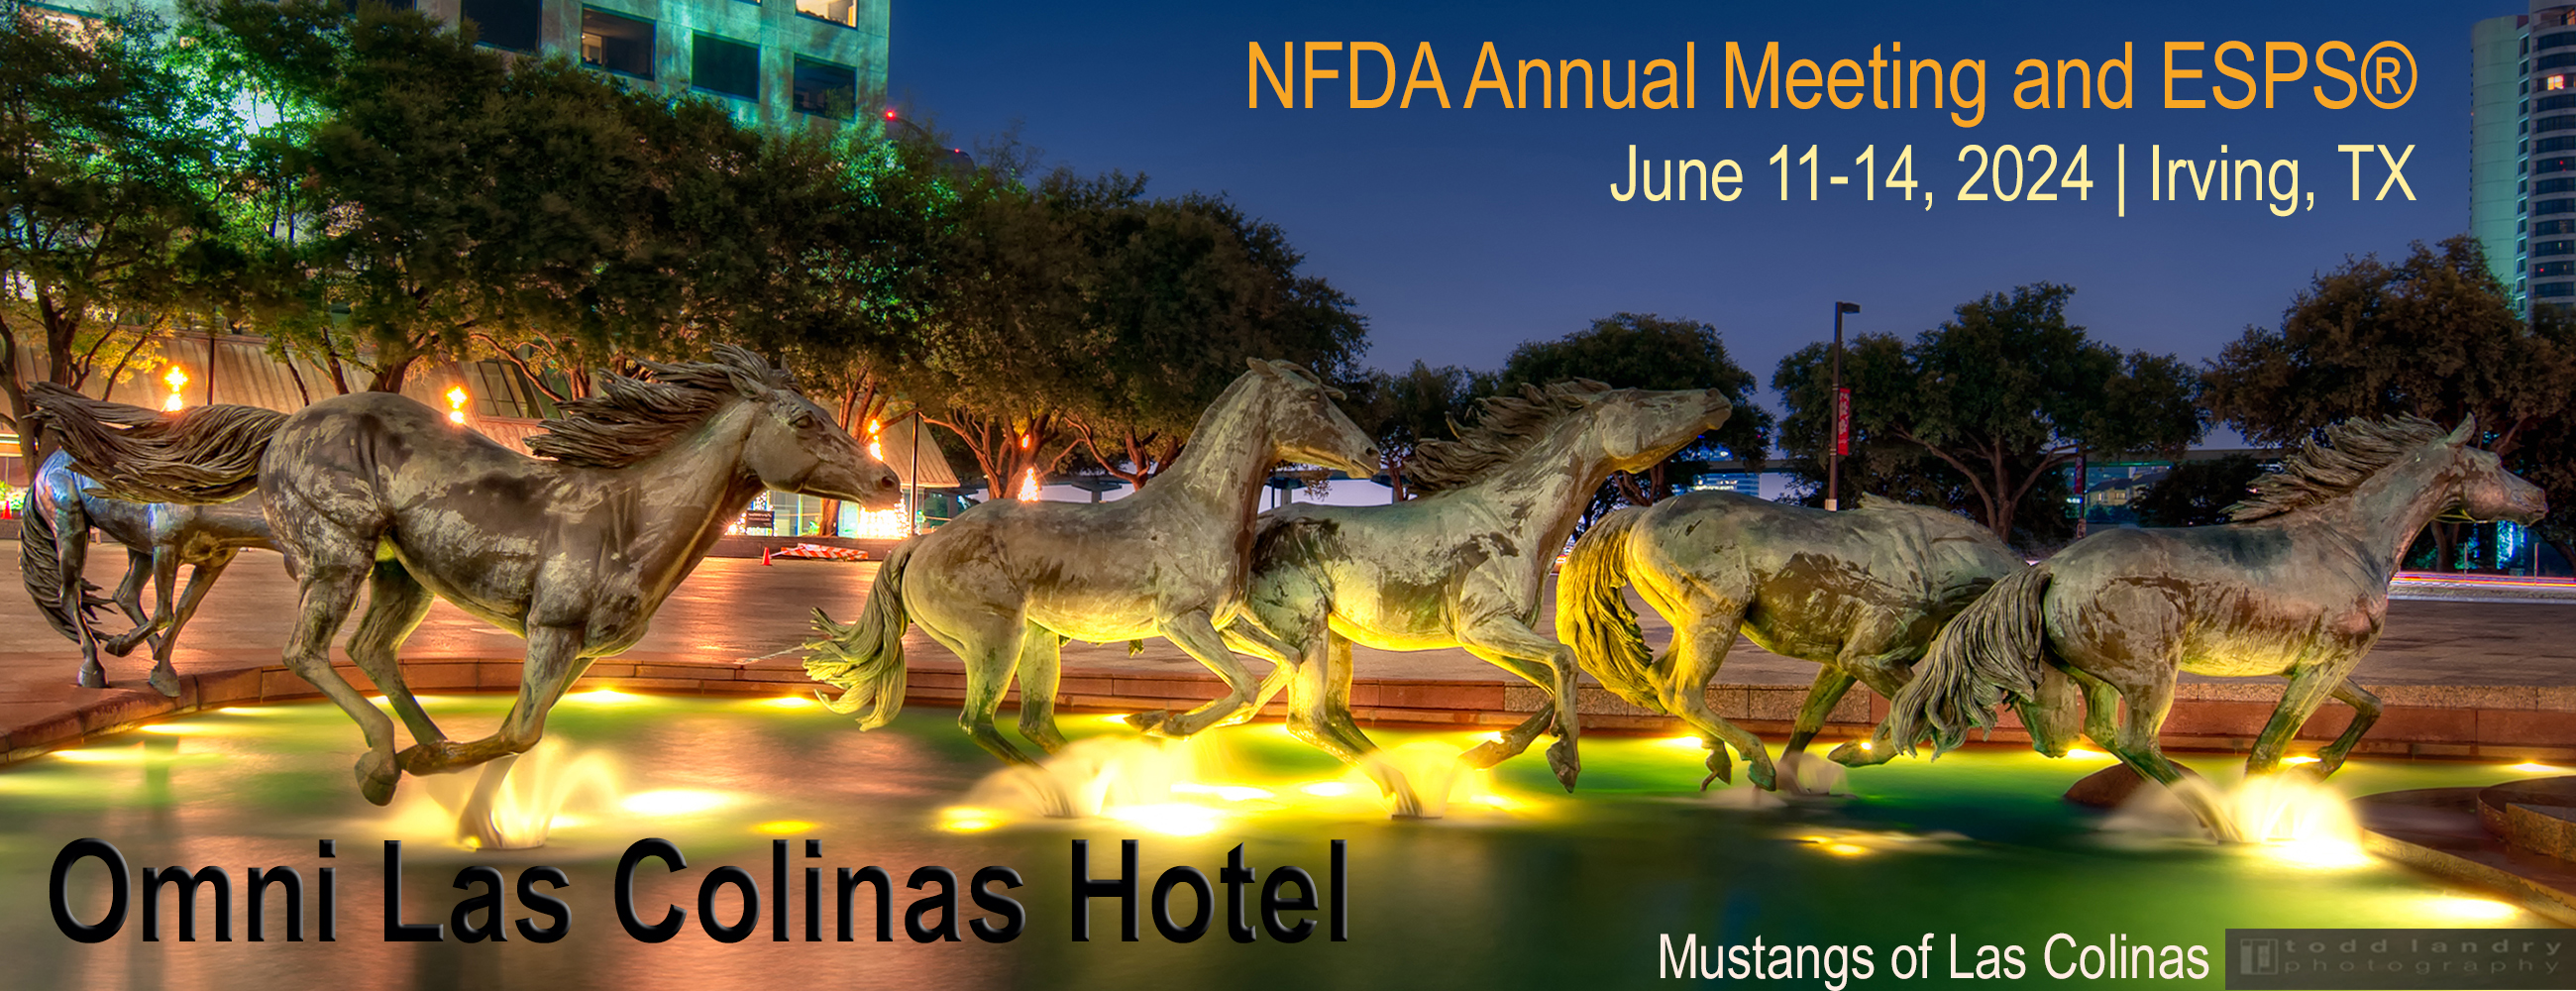 2024 NFDA Annual Meeting 2600x1000